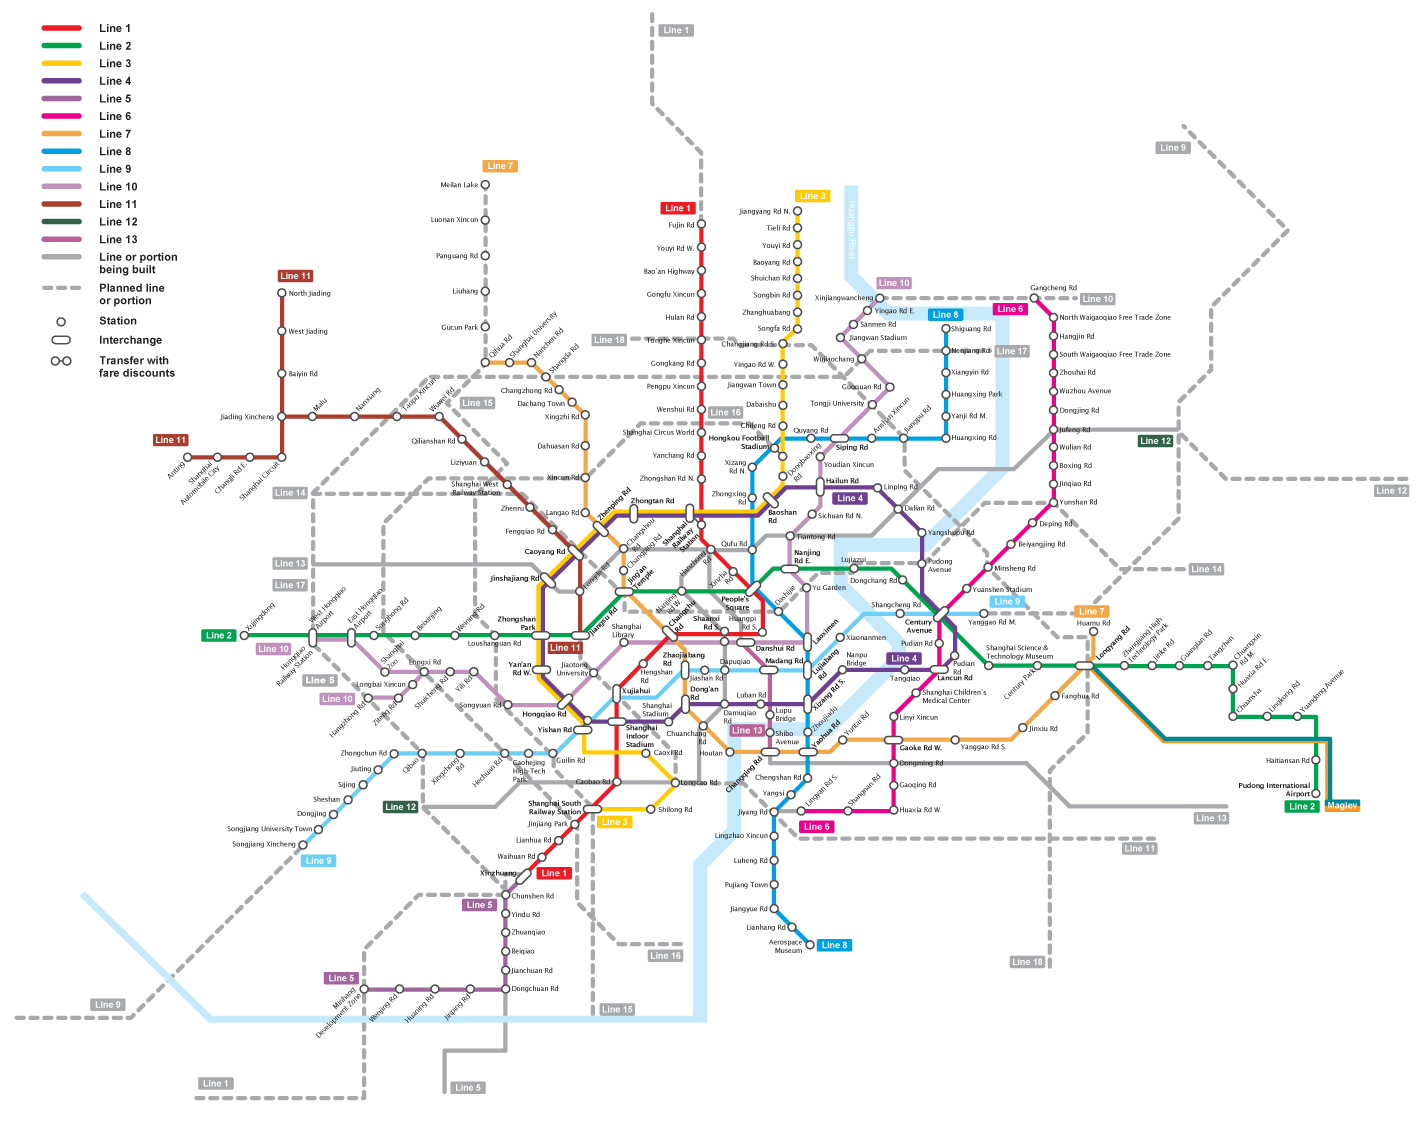 Shanghai Metro Map 2021